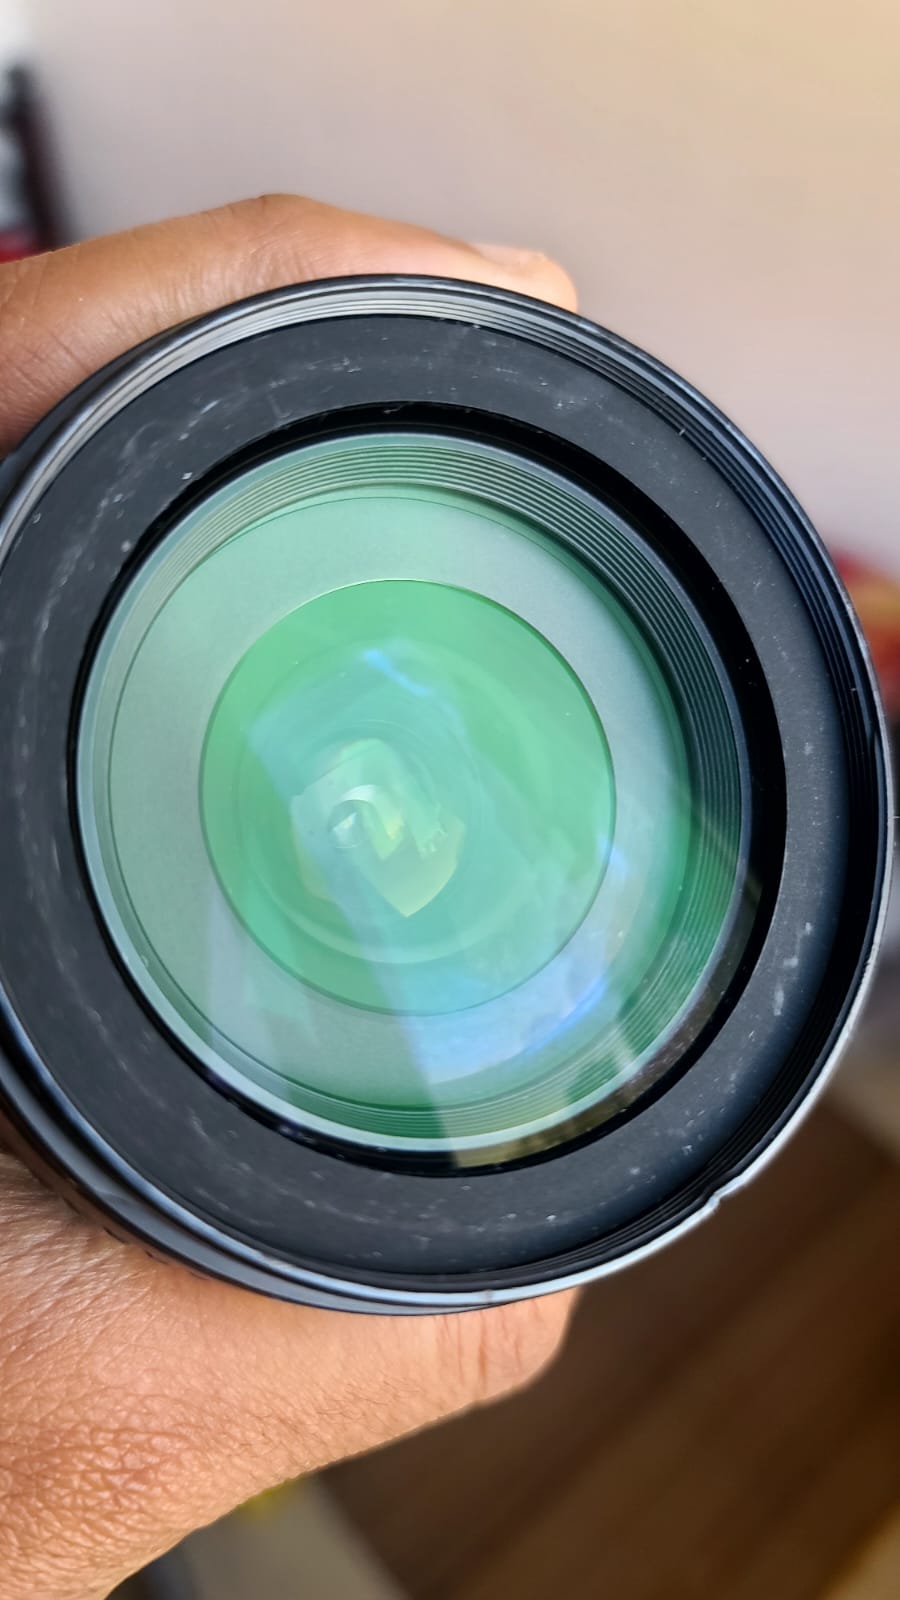 Nikon lens for sale